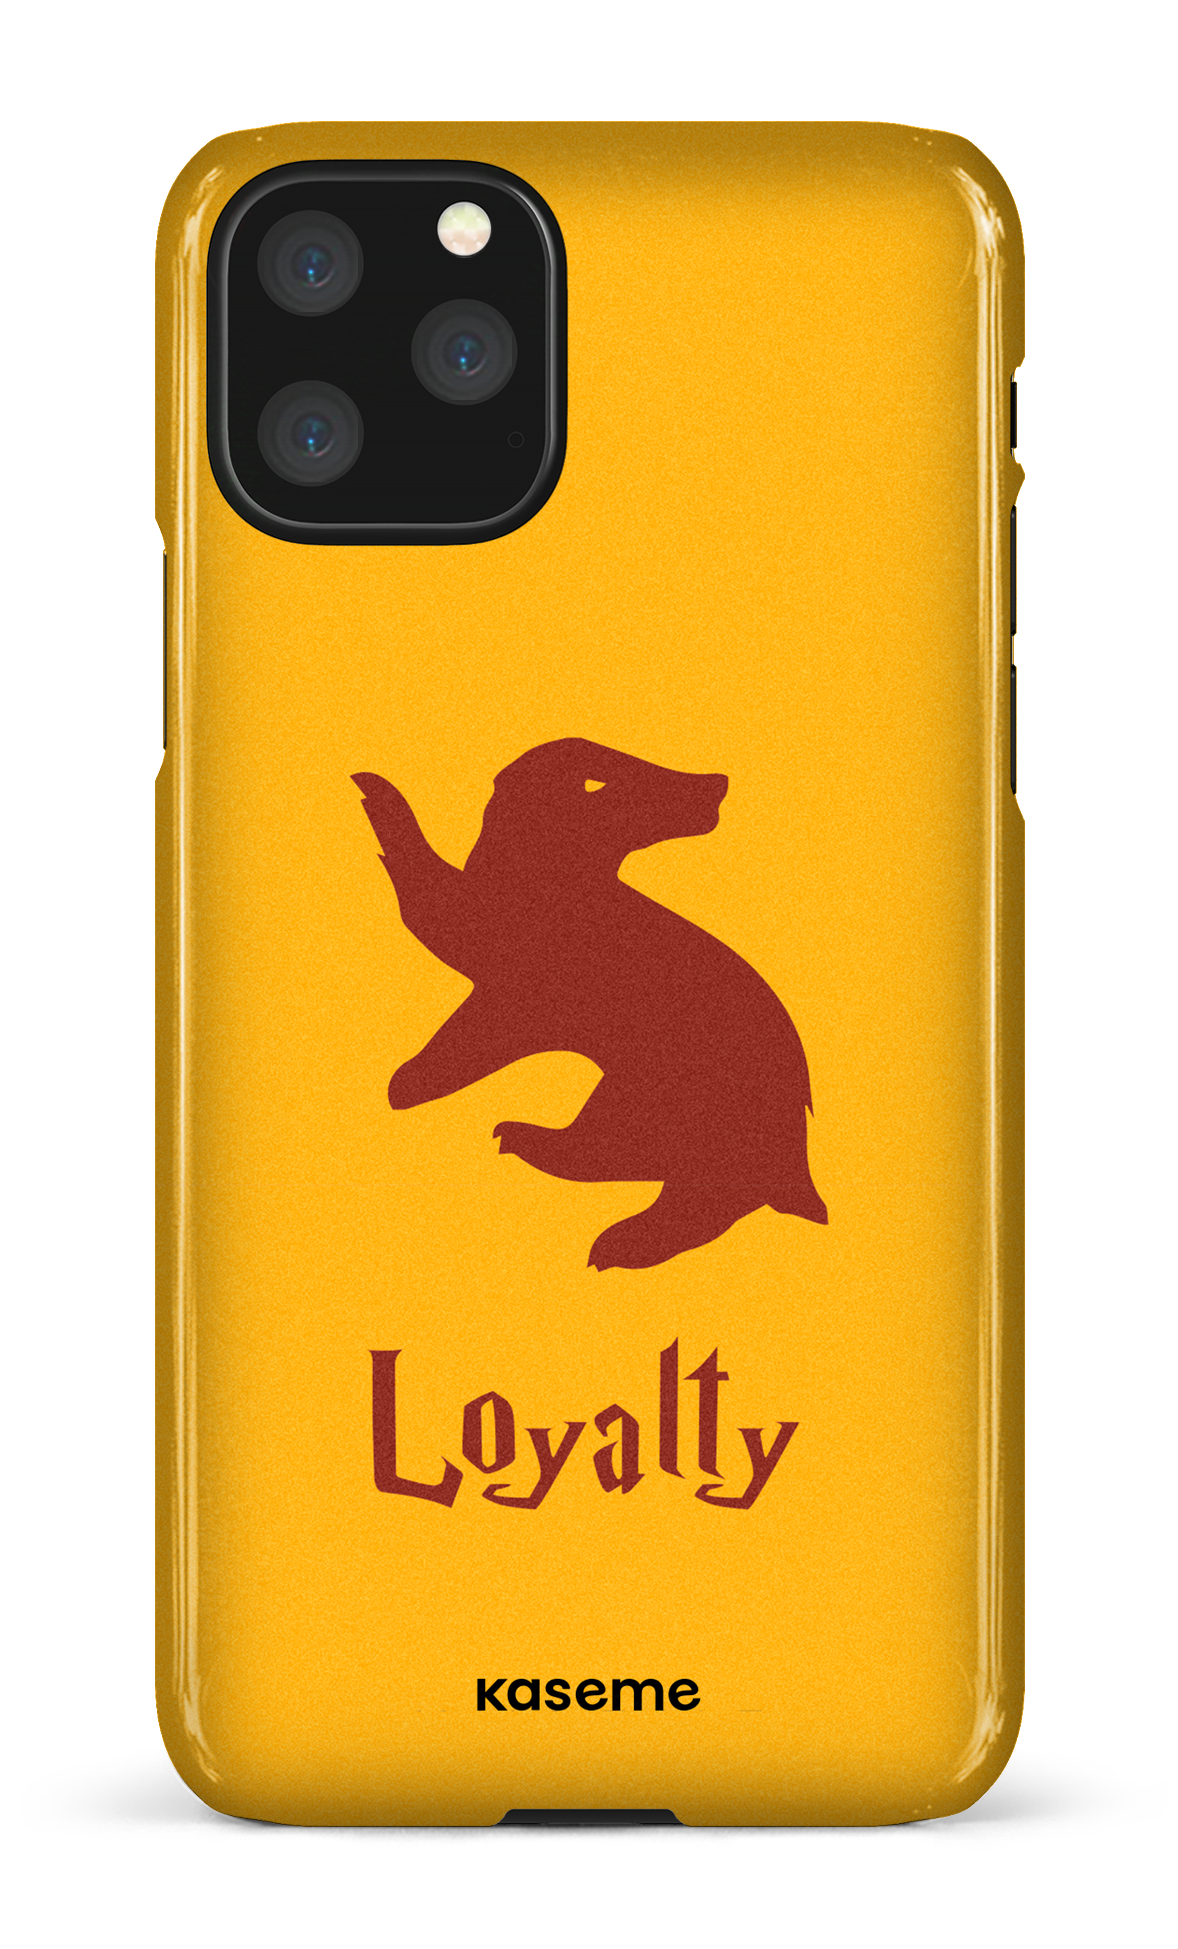 Loyalty - iPhone 11 Pro